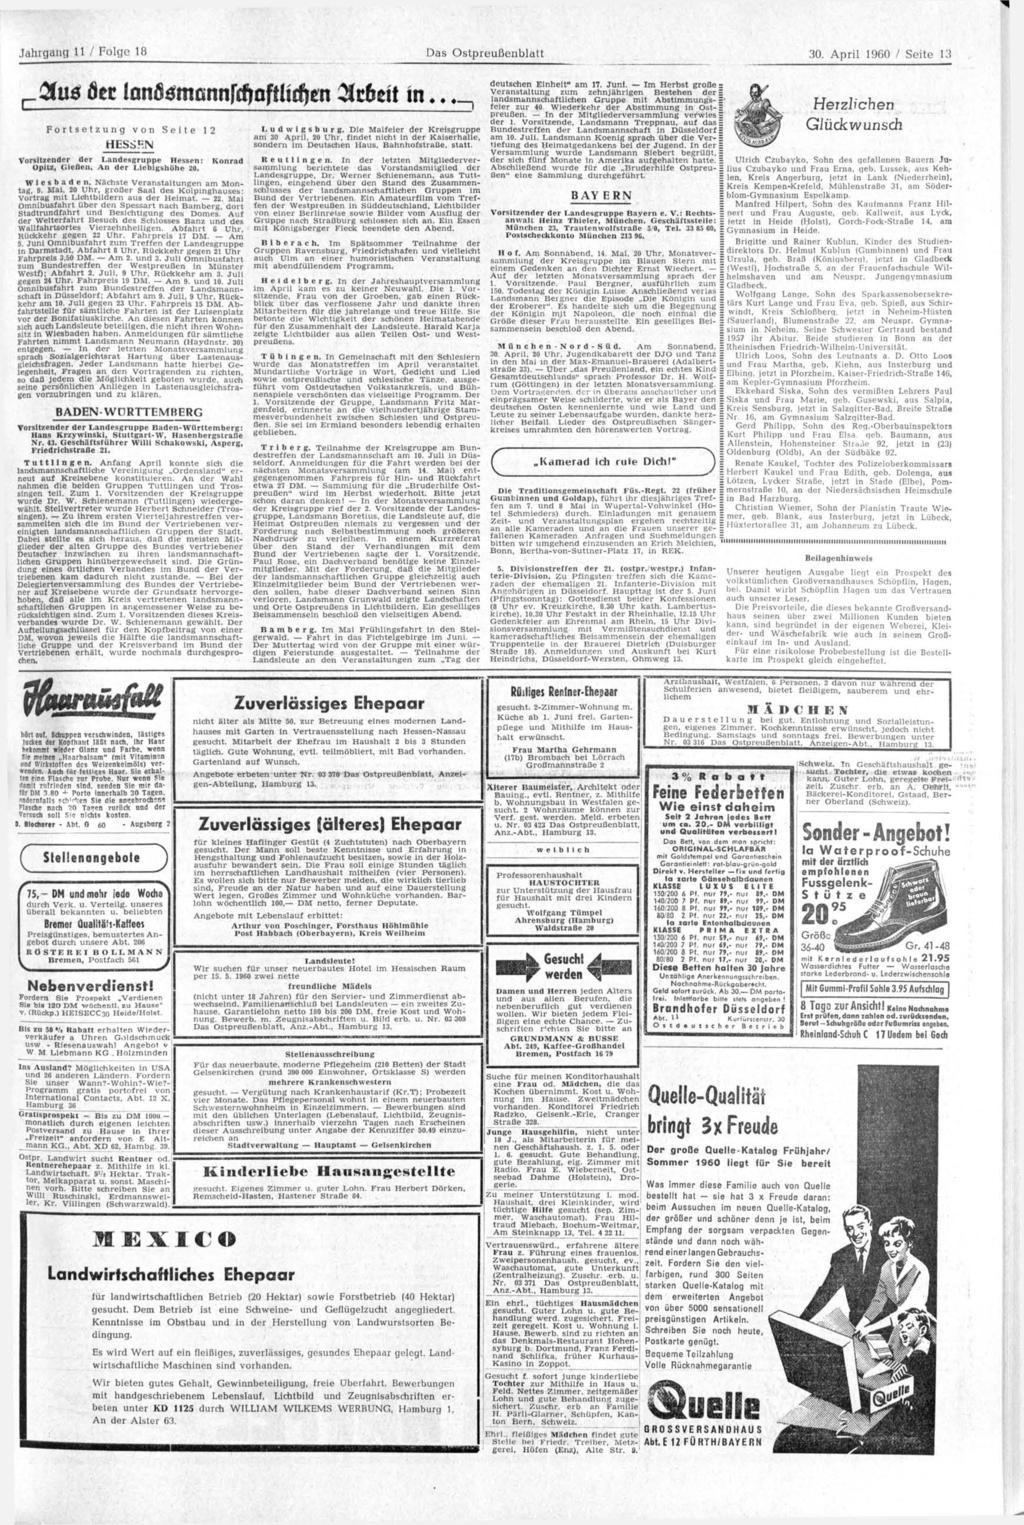 Jahrgang 11 / Folge 18 Das Ostpreußenblatt 30. April 1960 / Seite 13,_3tugflcclonfl^rriOirtnrfiyaftlitf)cn 31t6cÜ in.. Fortsetzung von Seite 12 HESSF.